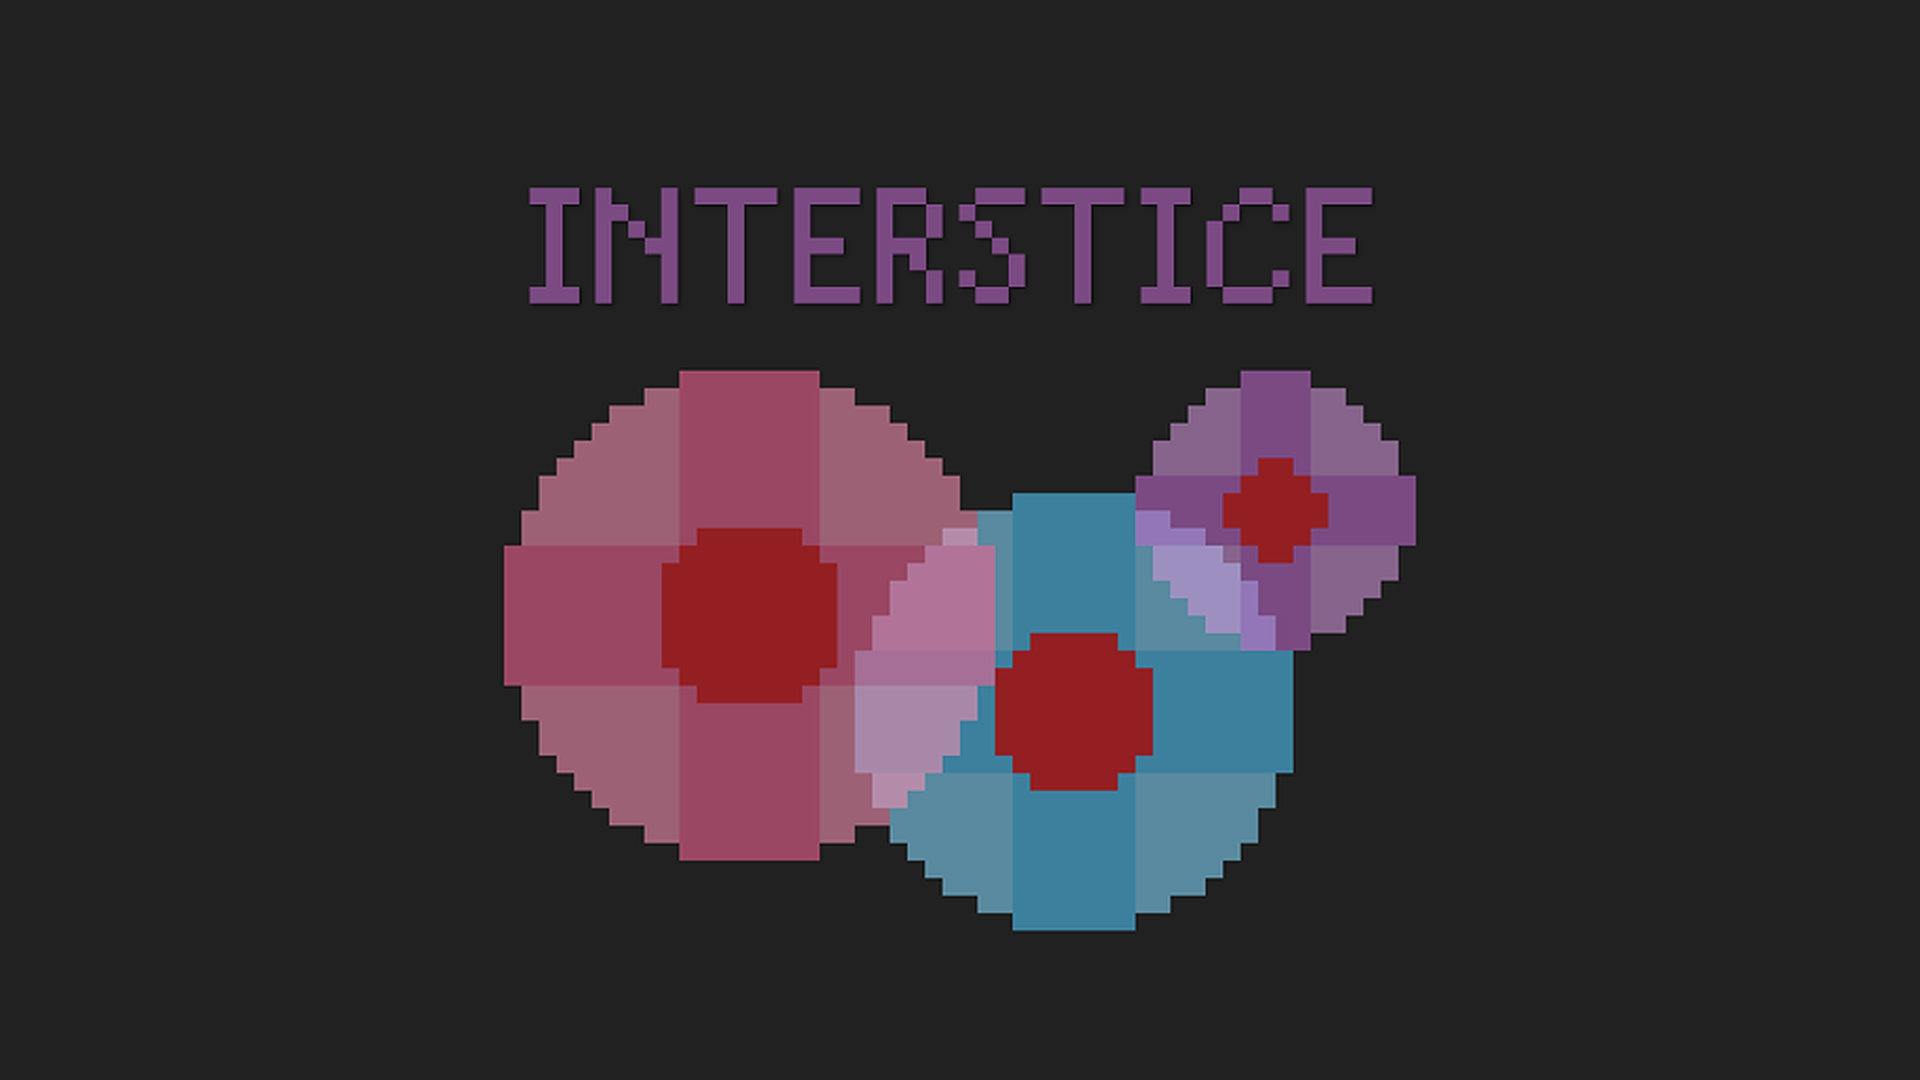 Interstice